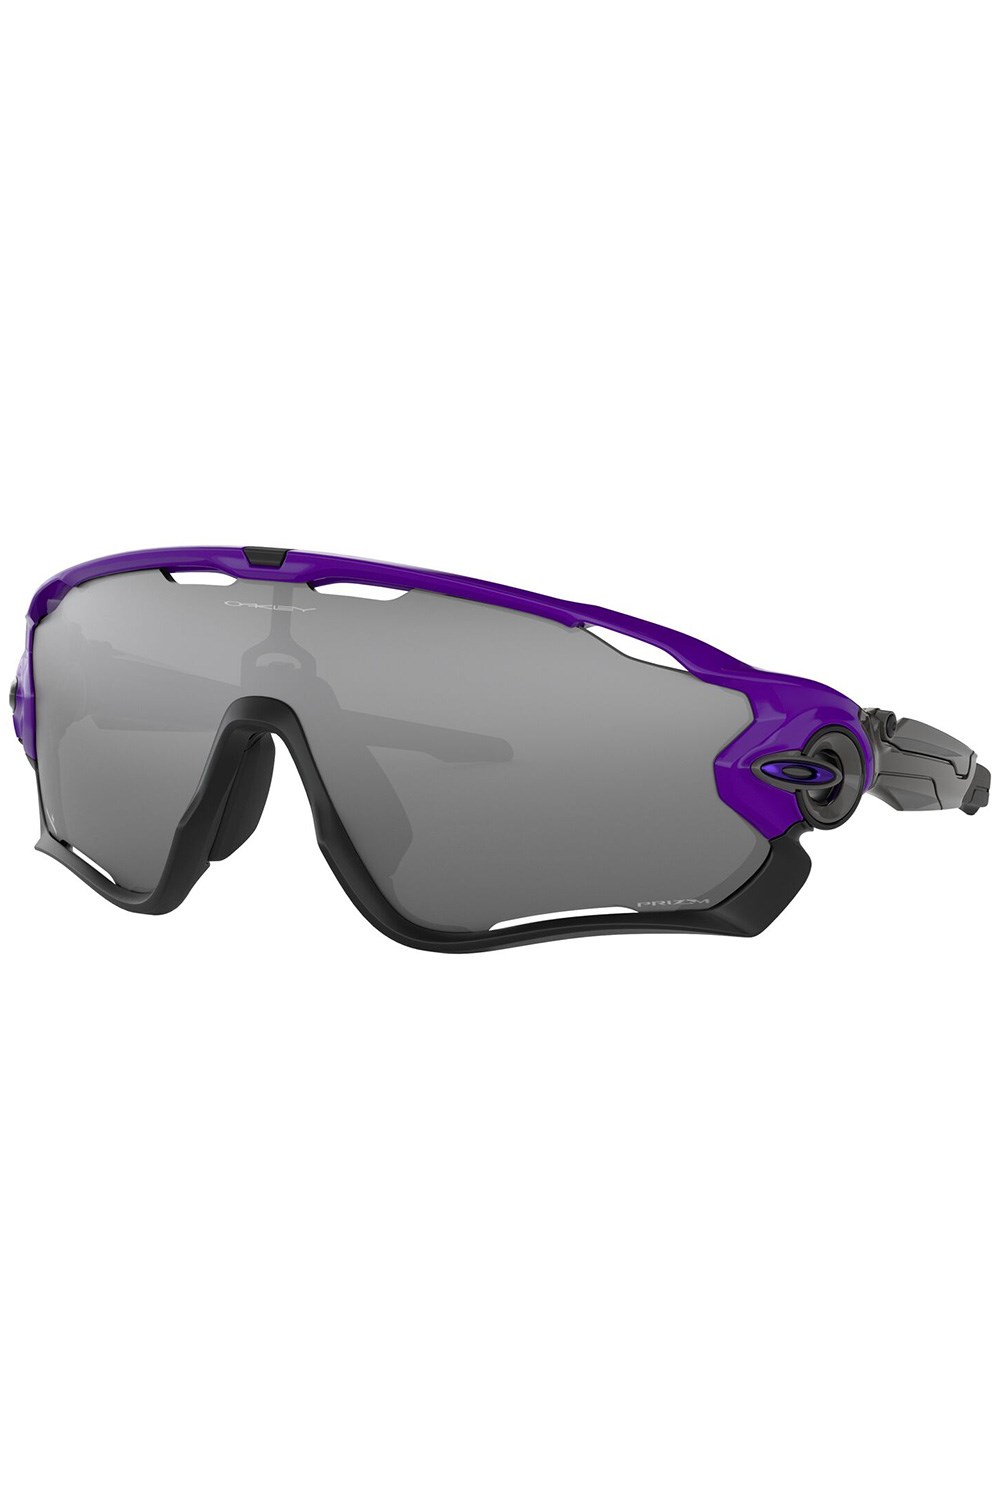 Jawbreaker Unisex Cycling Sunglasses -